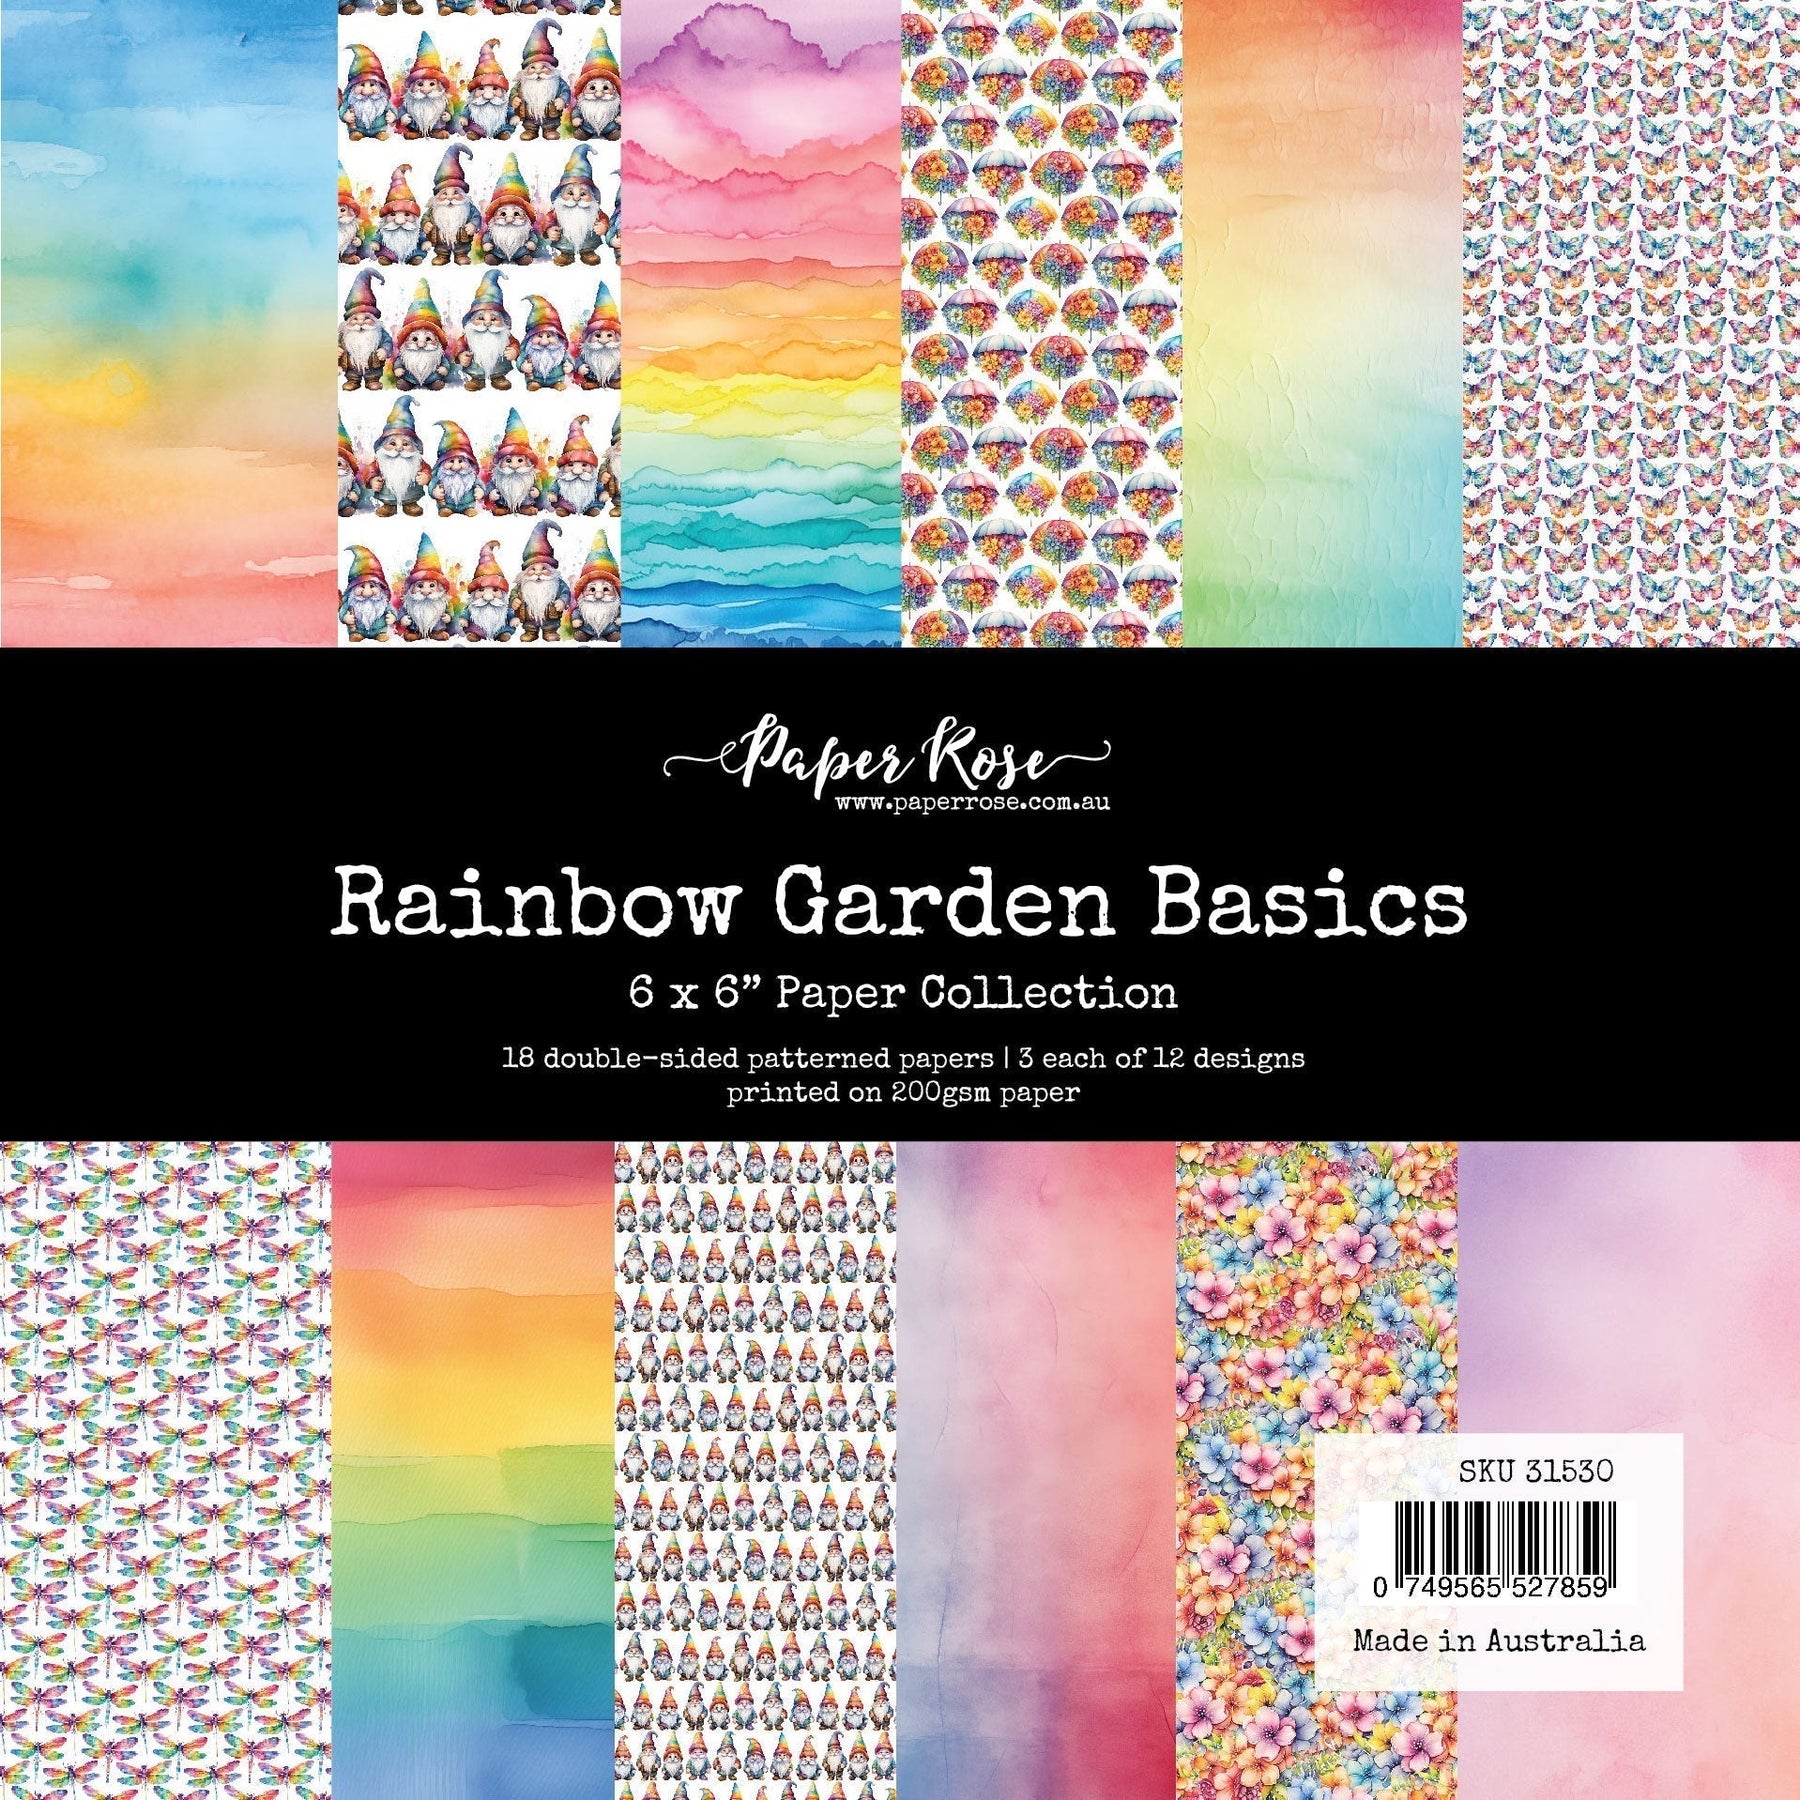 Rainbow Garden Basics 6x6 Paper Collection